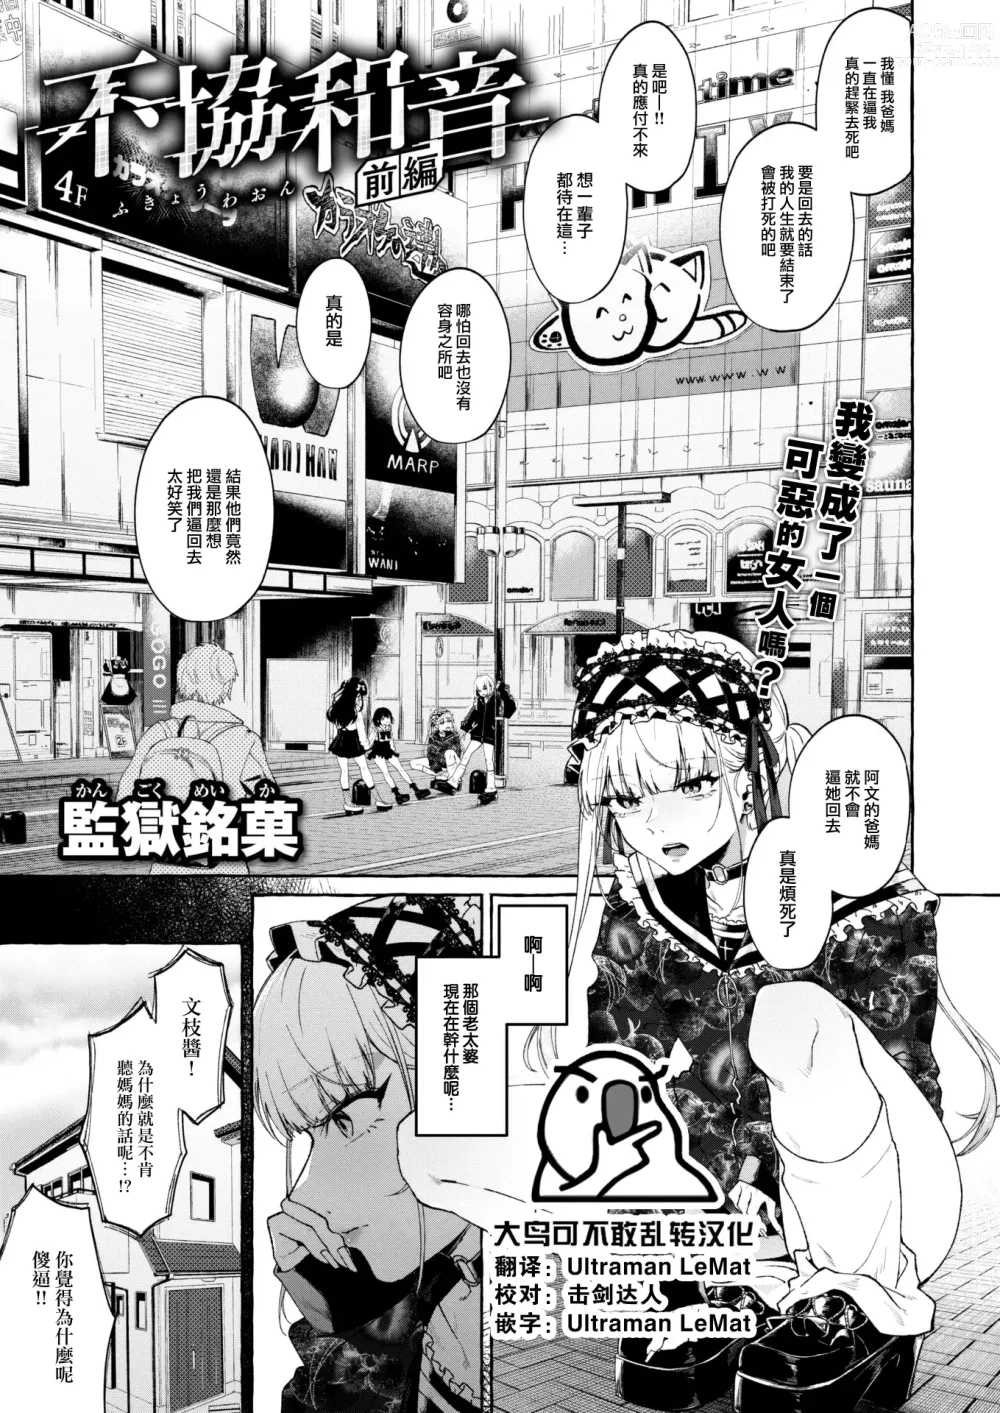 Page 1 of manga Fukyouwaon Zenpen